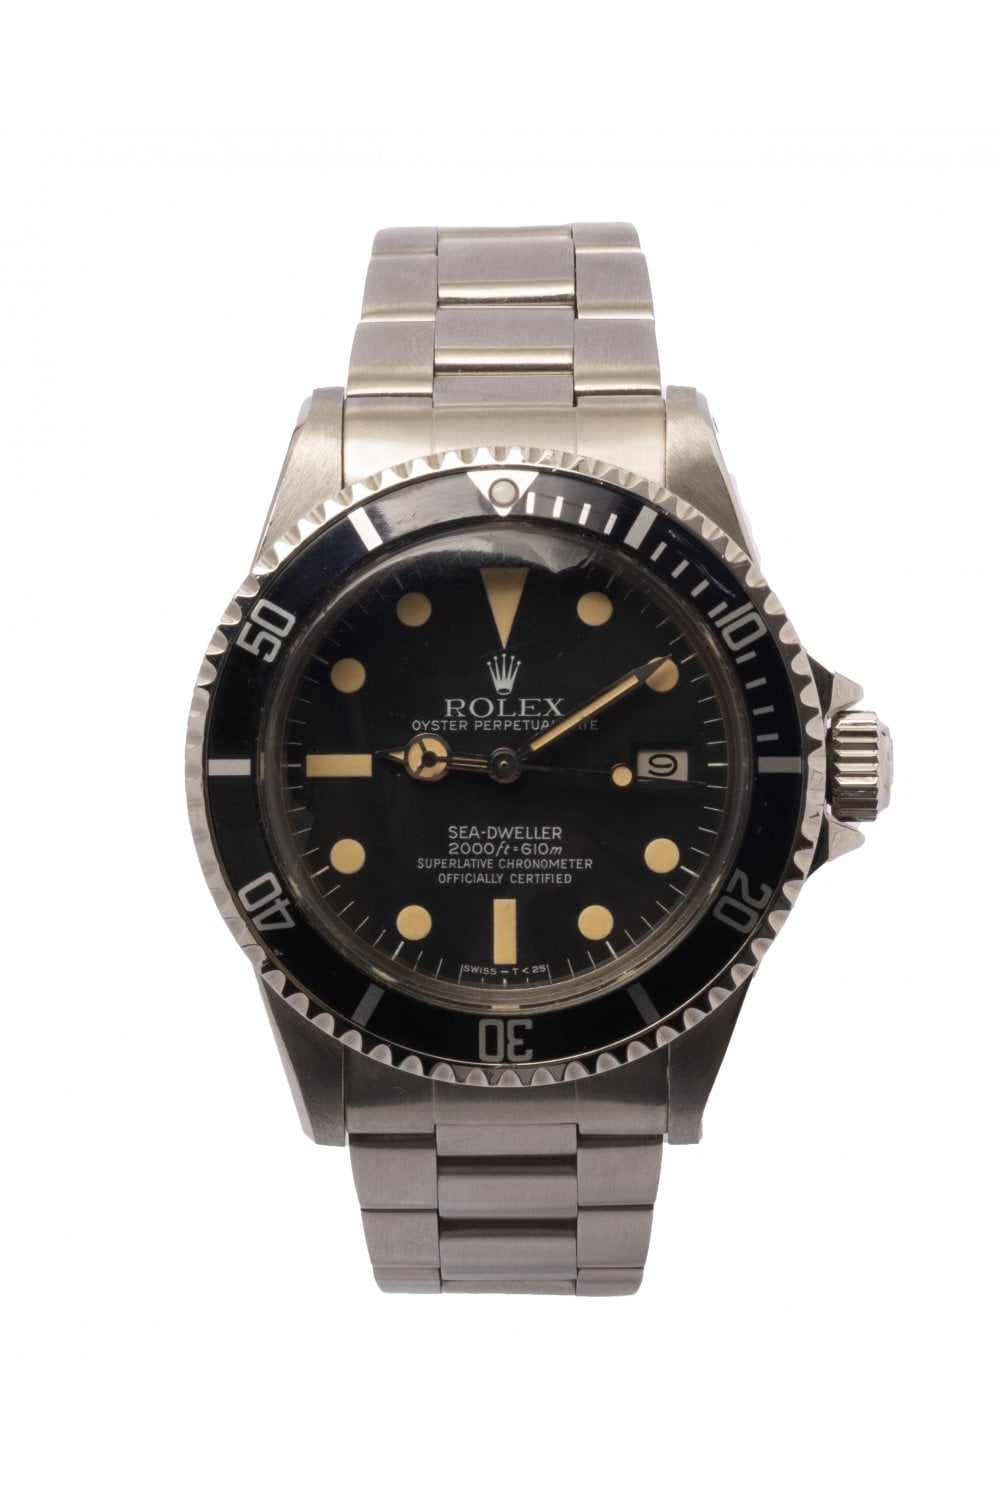 Rolex Sea-Dweller 1665 1982